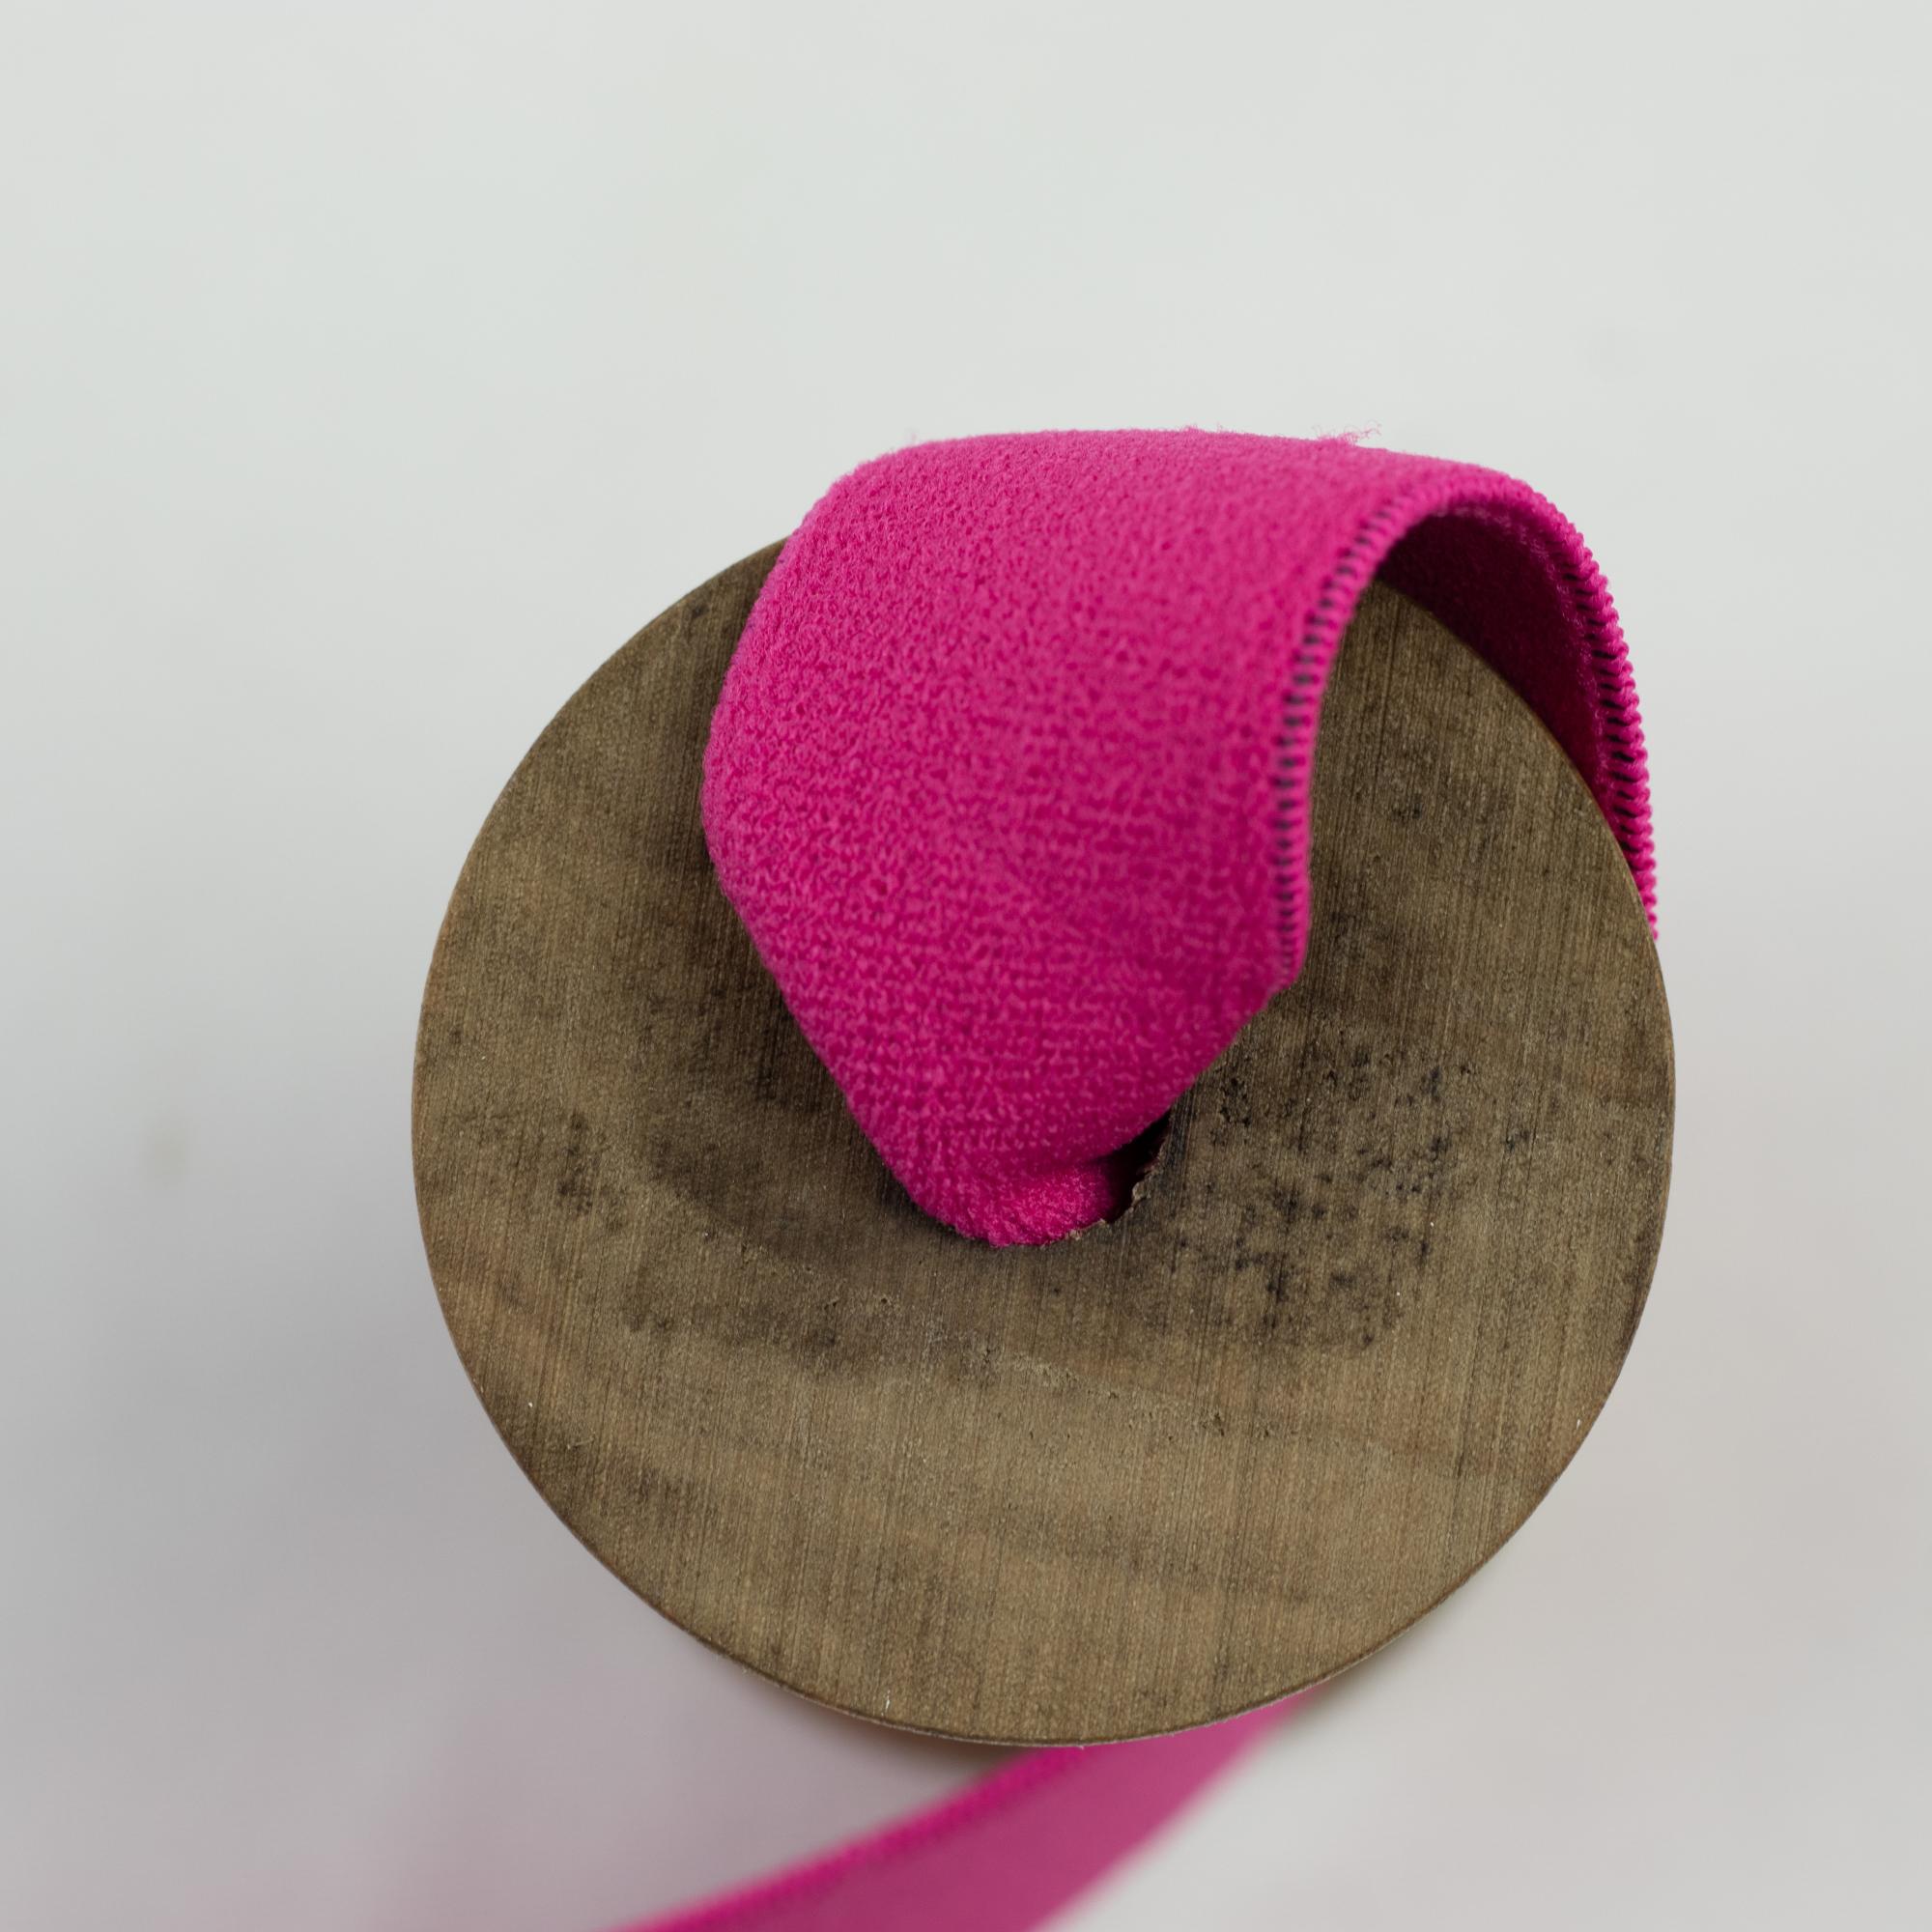 Gummiband Wäschegummi Uni Pink 2,5 cm